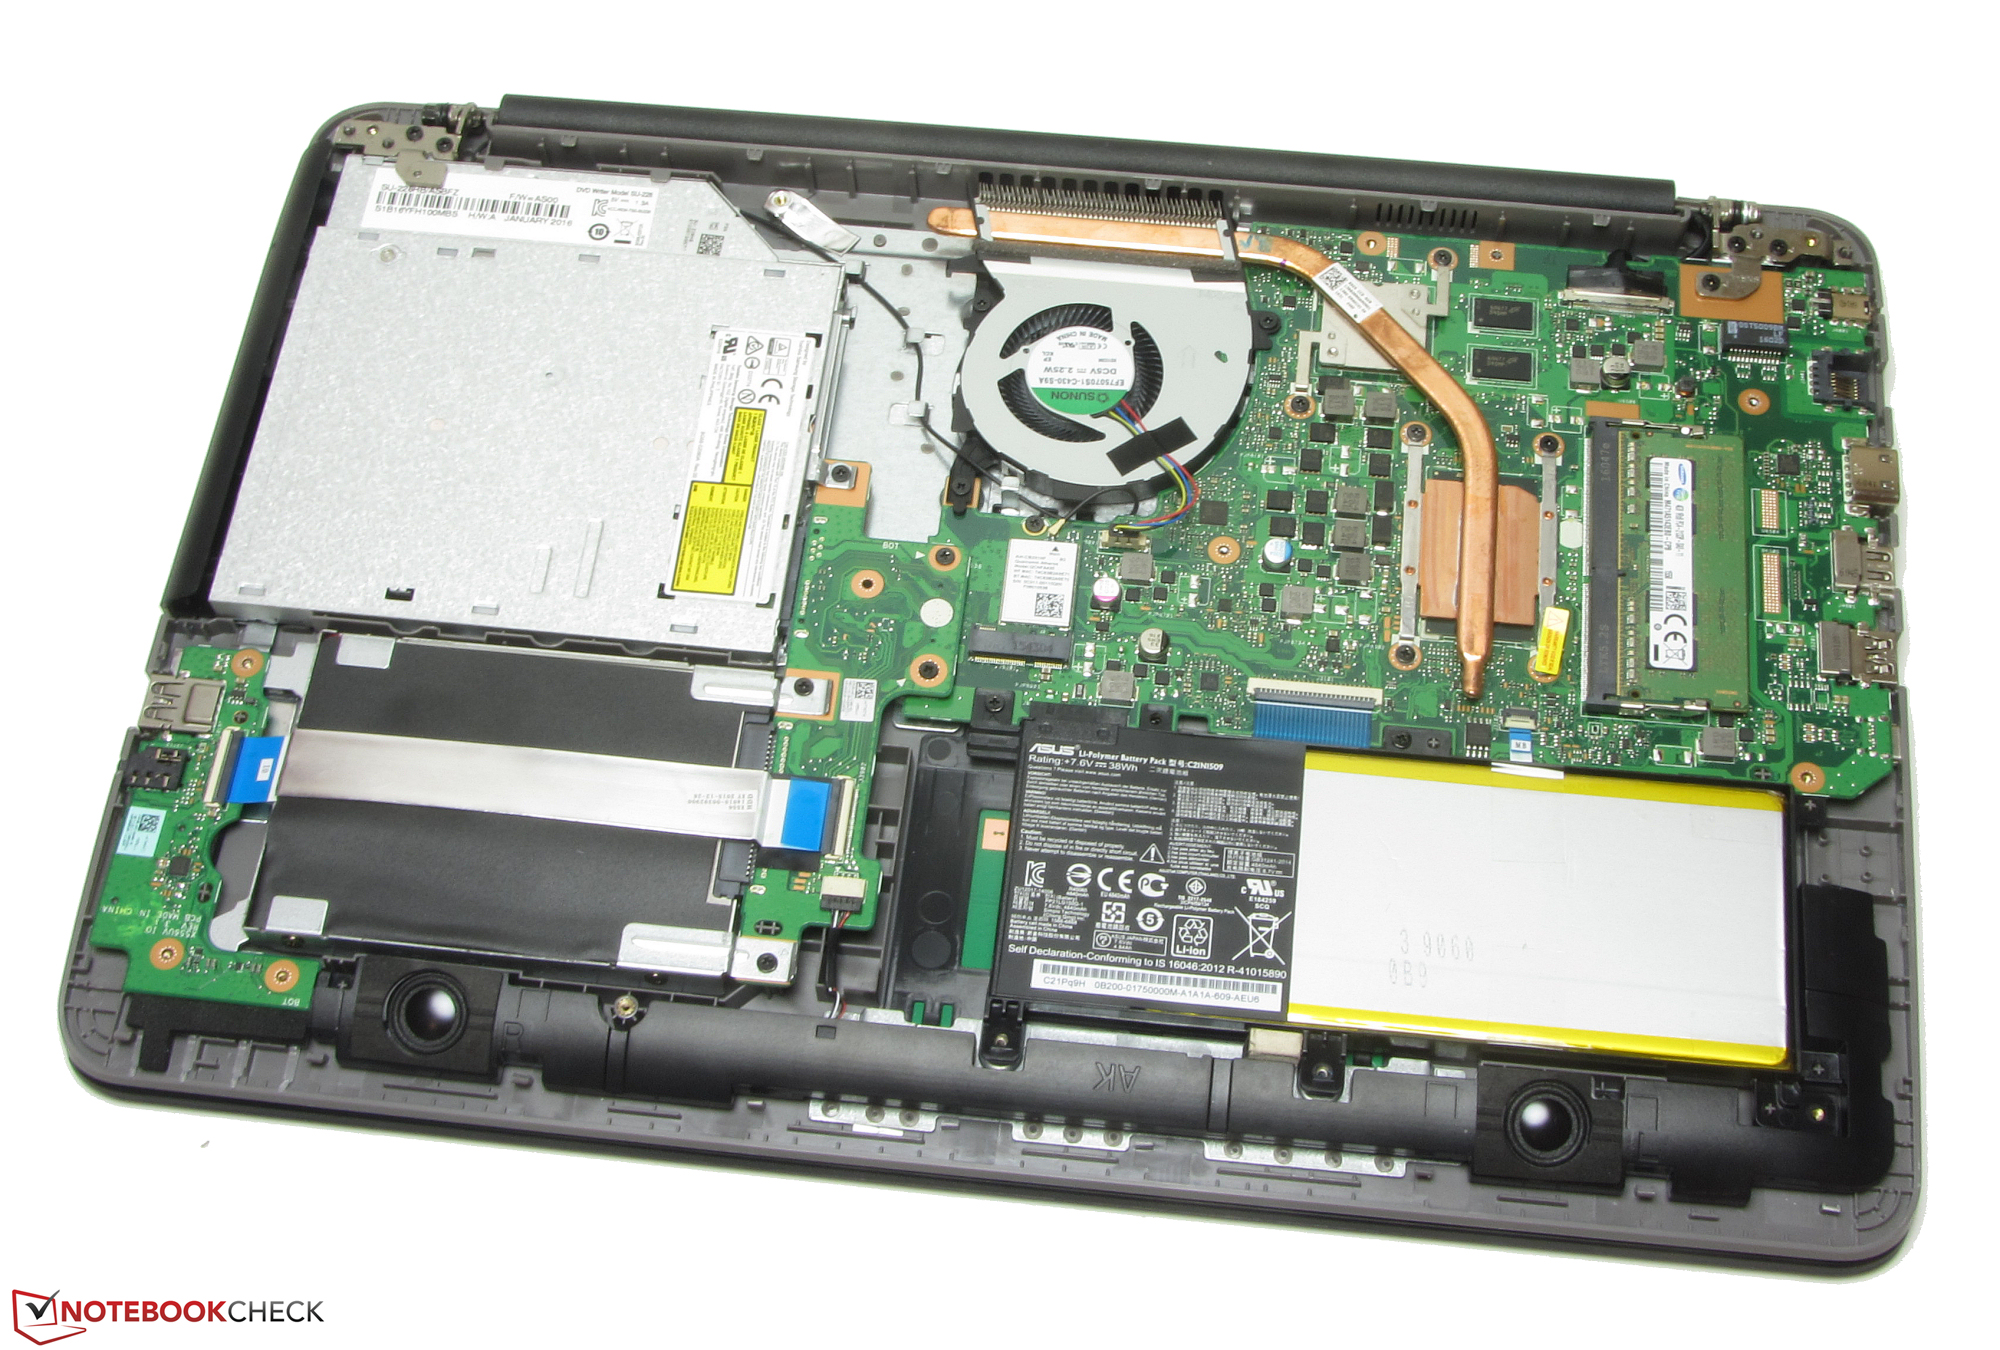 çekicilik Barış Ulaşın  Asus VivoBook X556UQ-XO076T Notebook Review - NotebookCheck.net Reviews